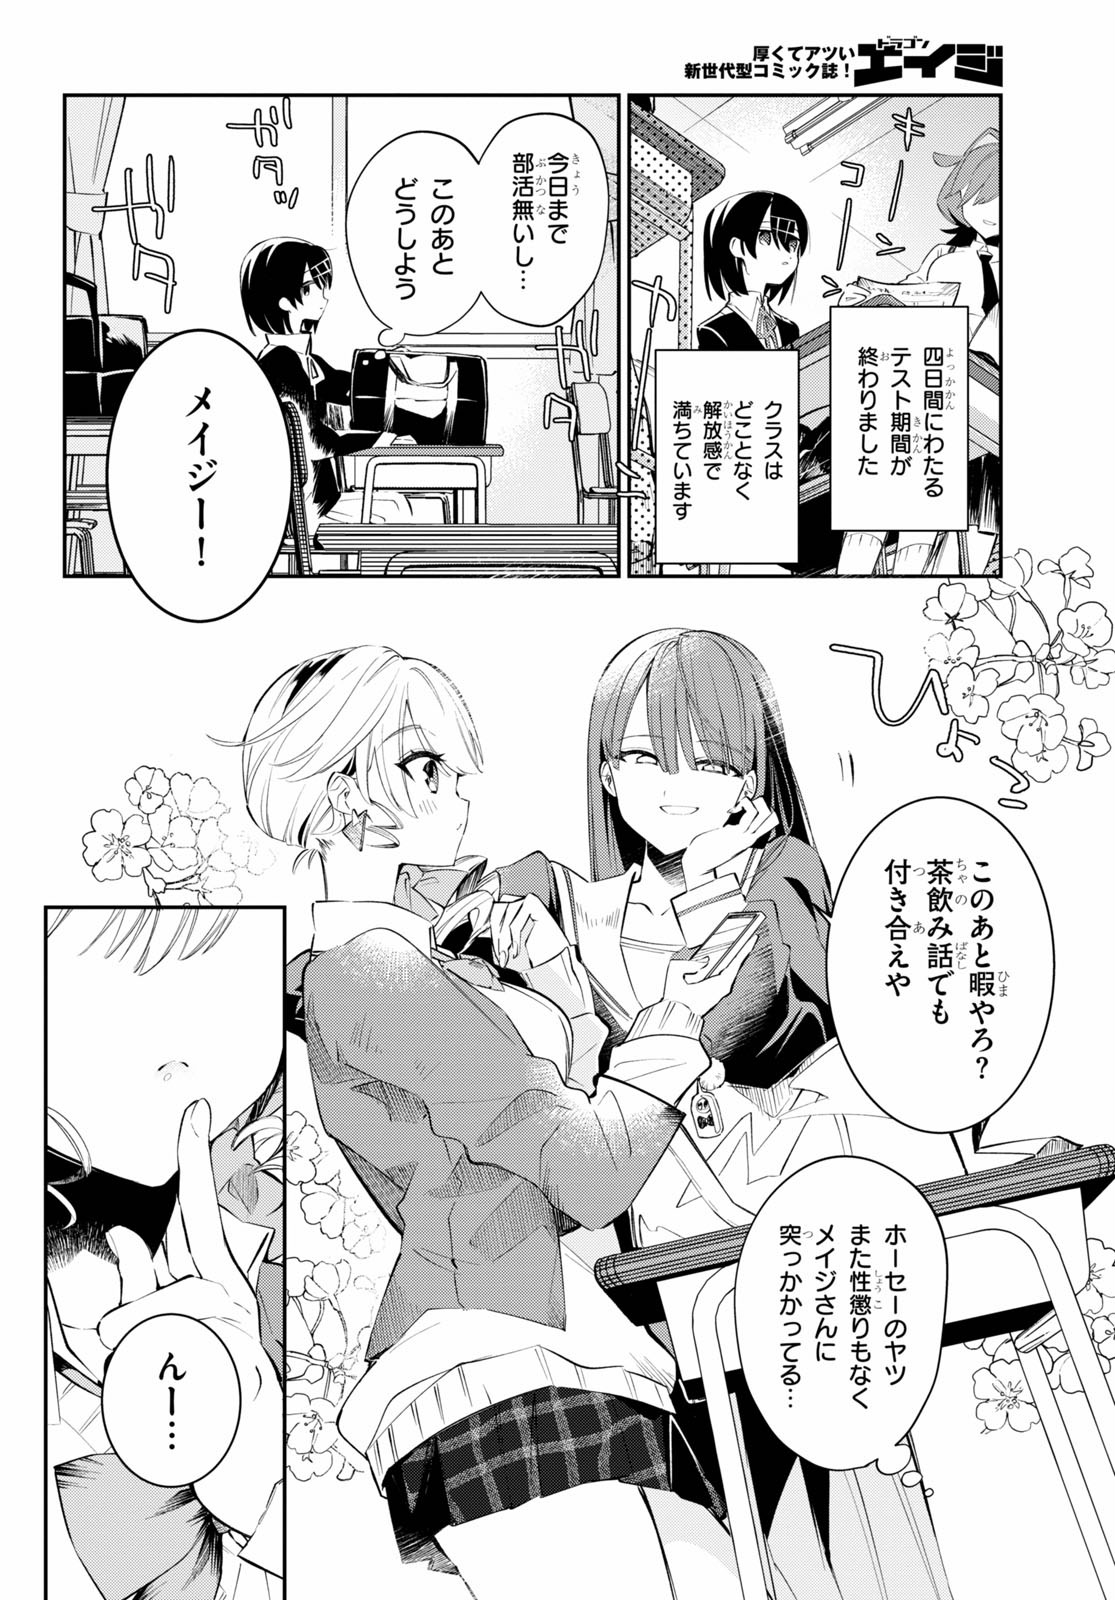 Daigaku-chan × High School - Chapter 9 - Page 2